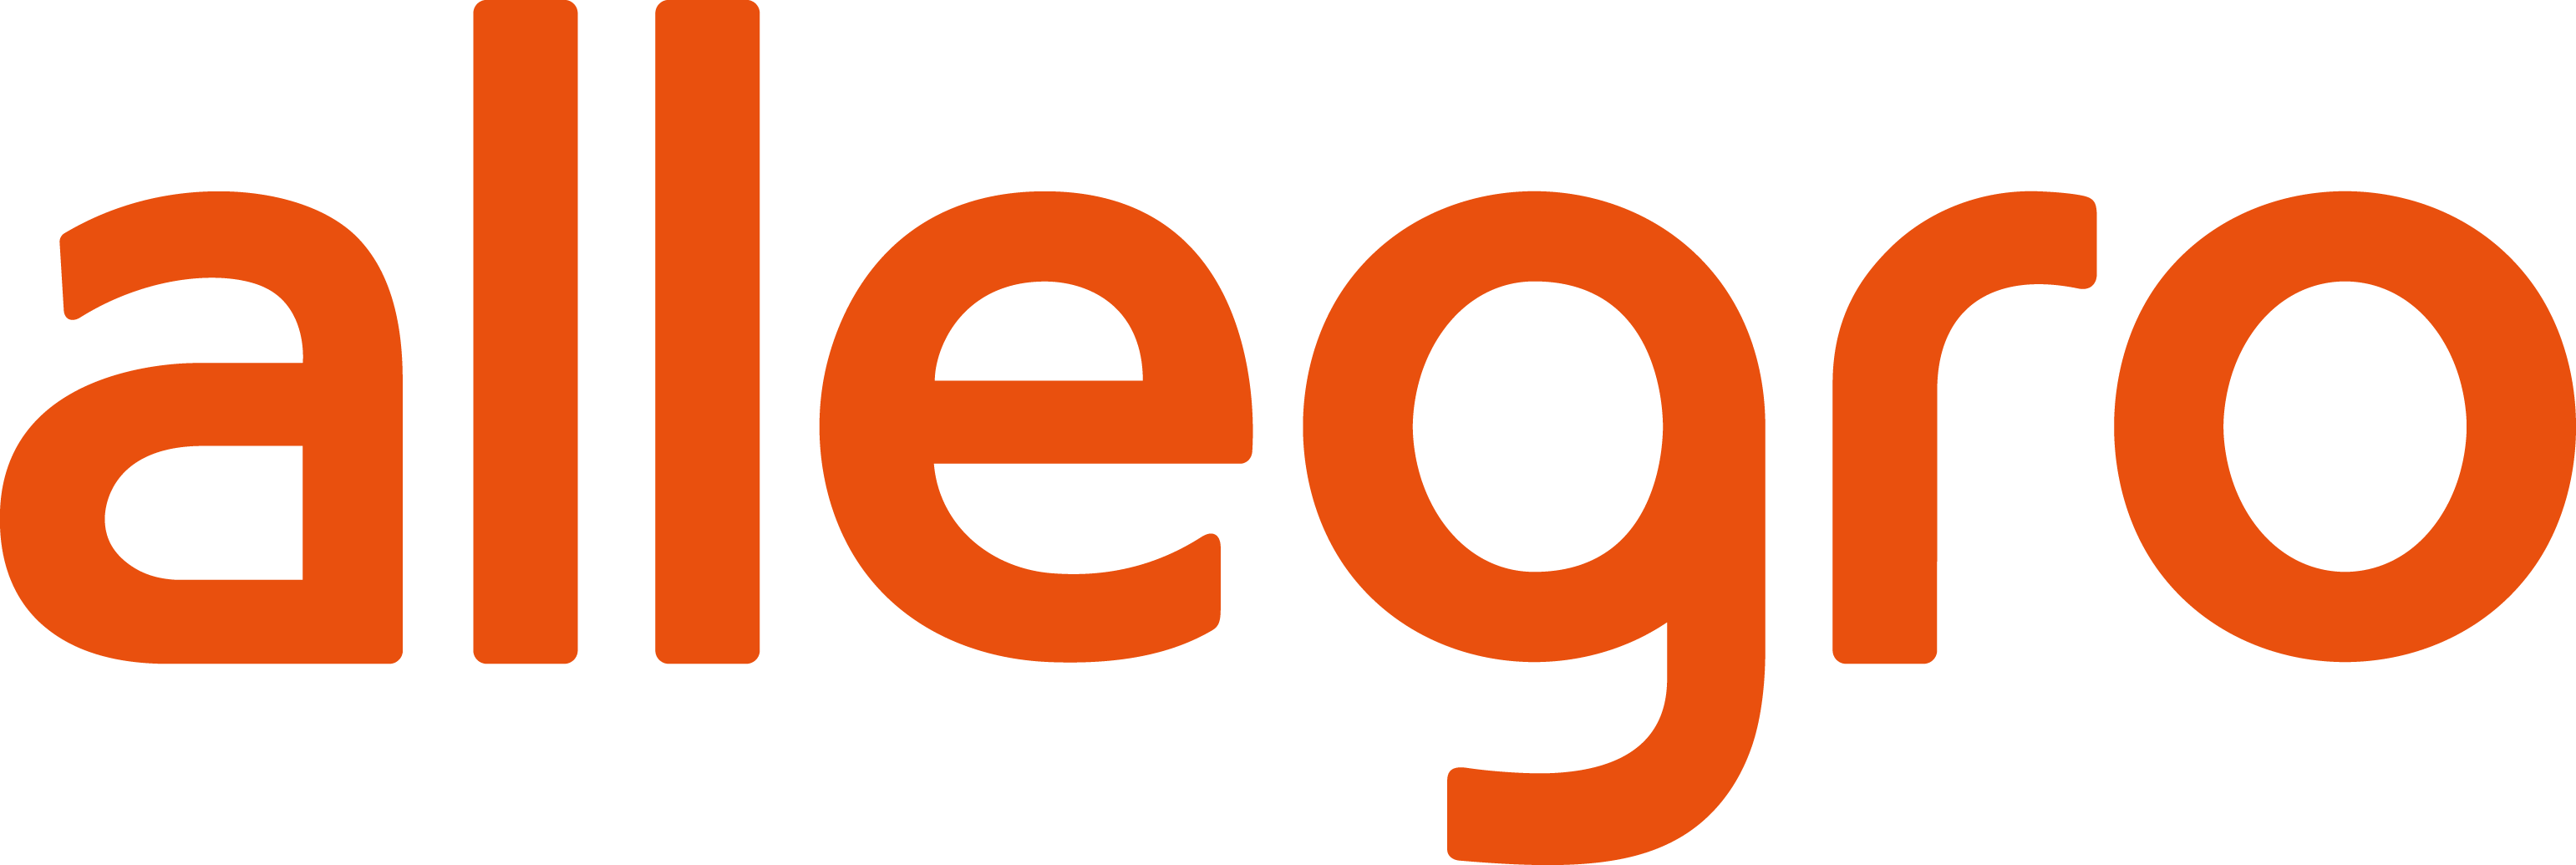 allegro-logo_freelogovectors.net_.png